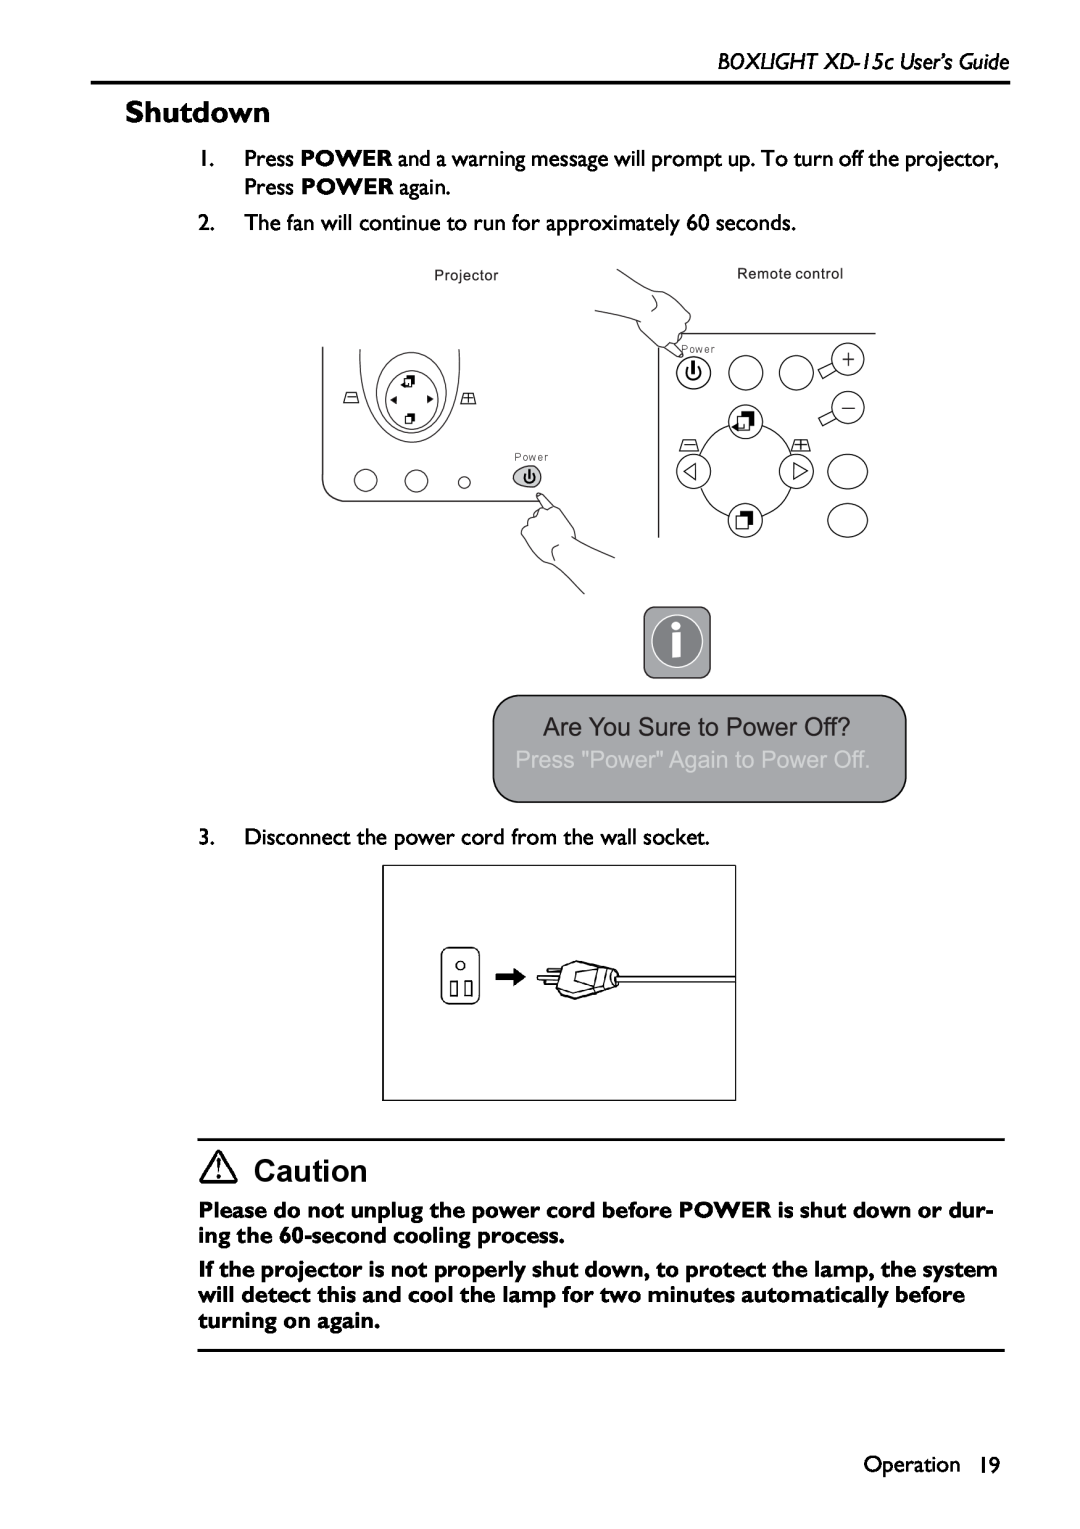 BOXLIGHT manual Shutdown, BOXLIGHT XD-15c User’s Guide, Power Power 